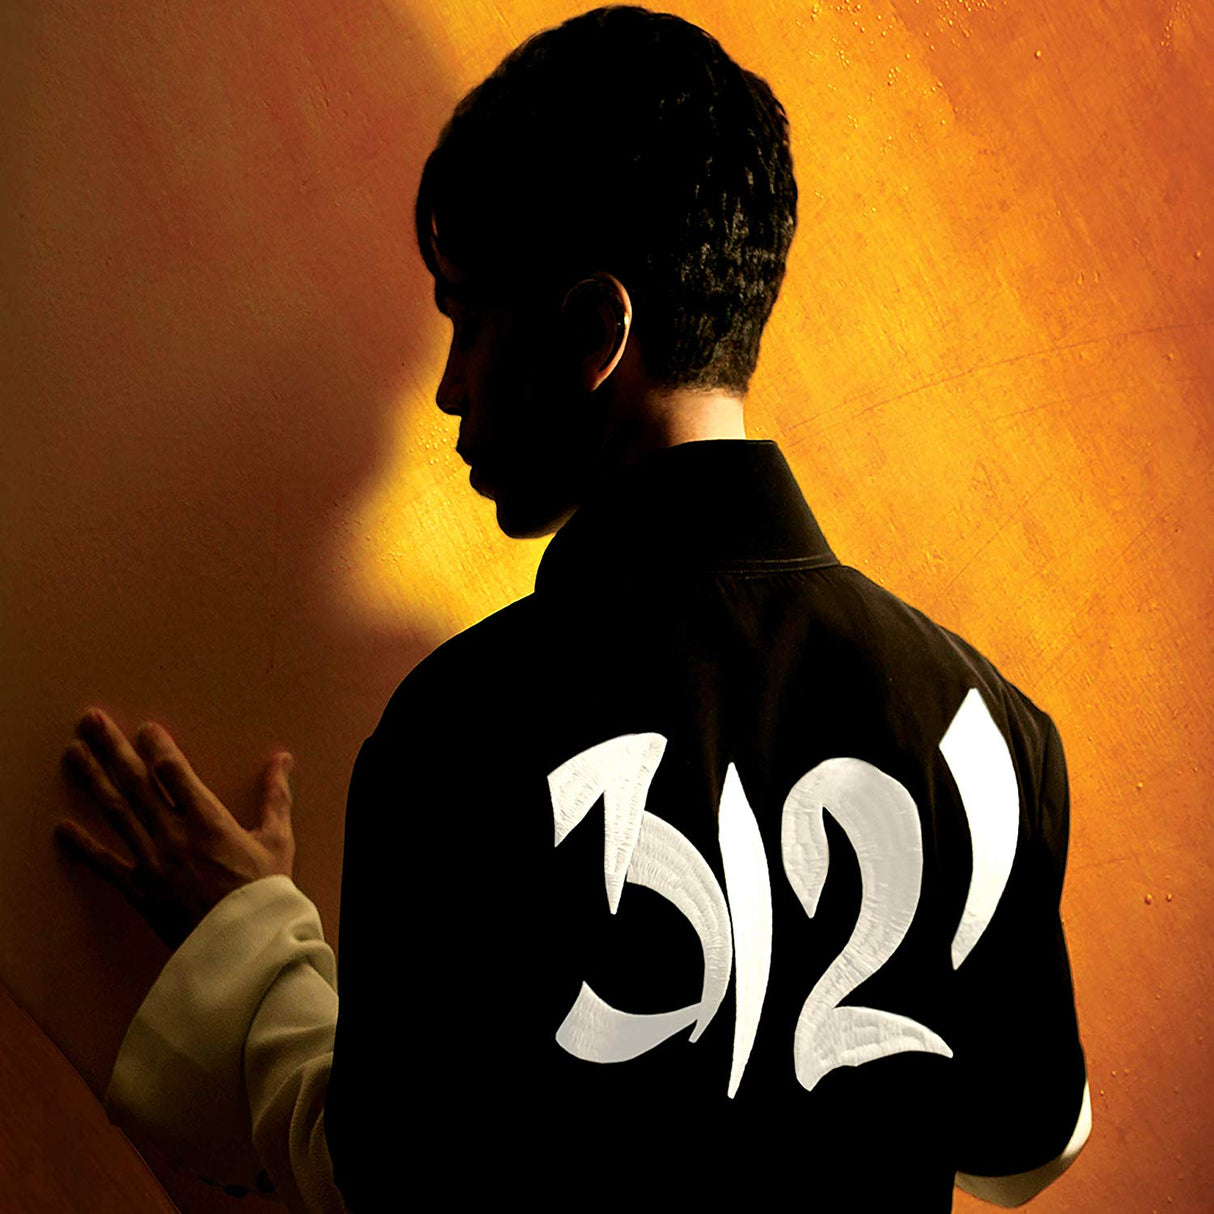 Prince - 3121 [Vinyl]